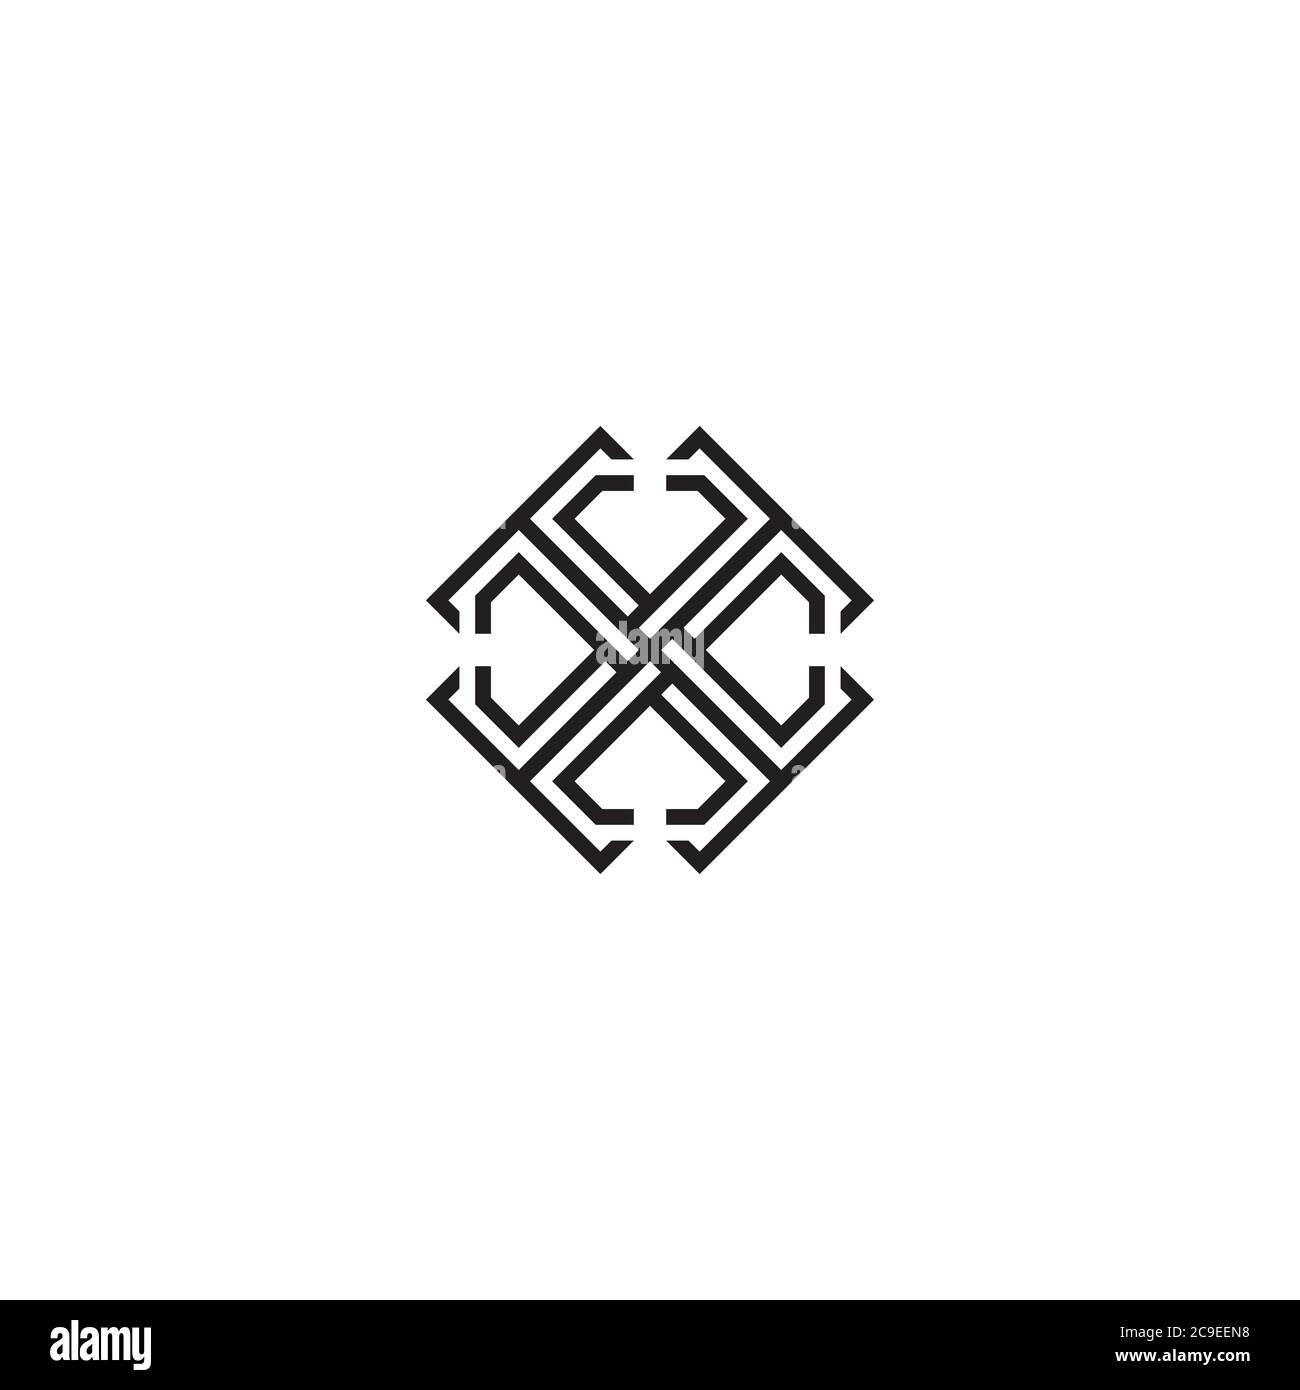 Letter T and Diamond logo / icon design Stock Vector